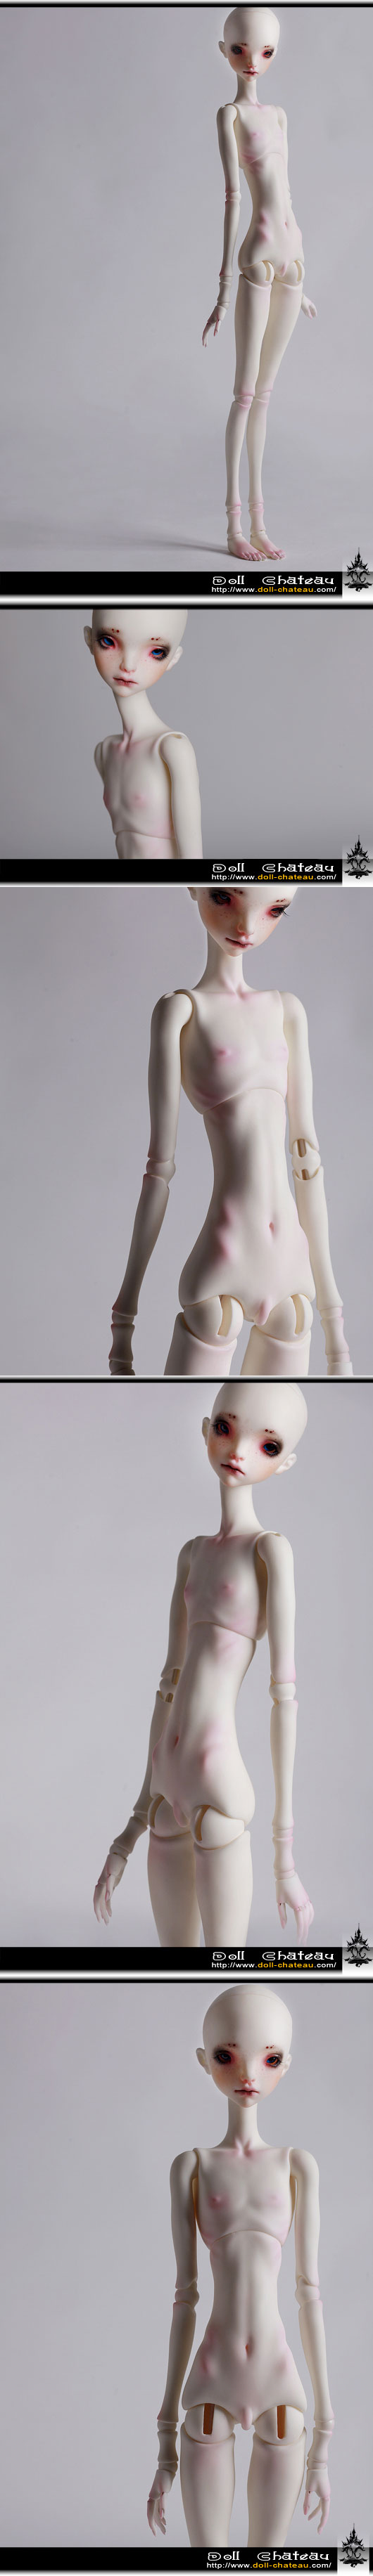 BJD  k-body-12 Boy Boll-jointed doll